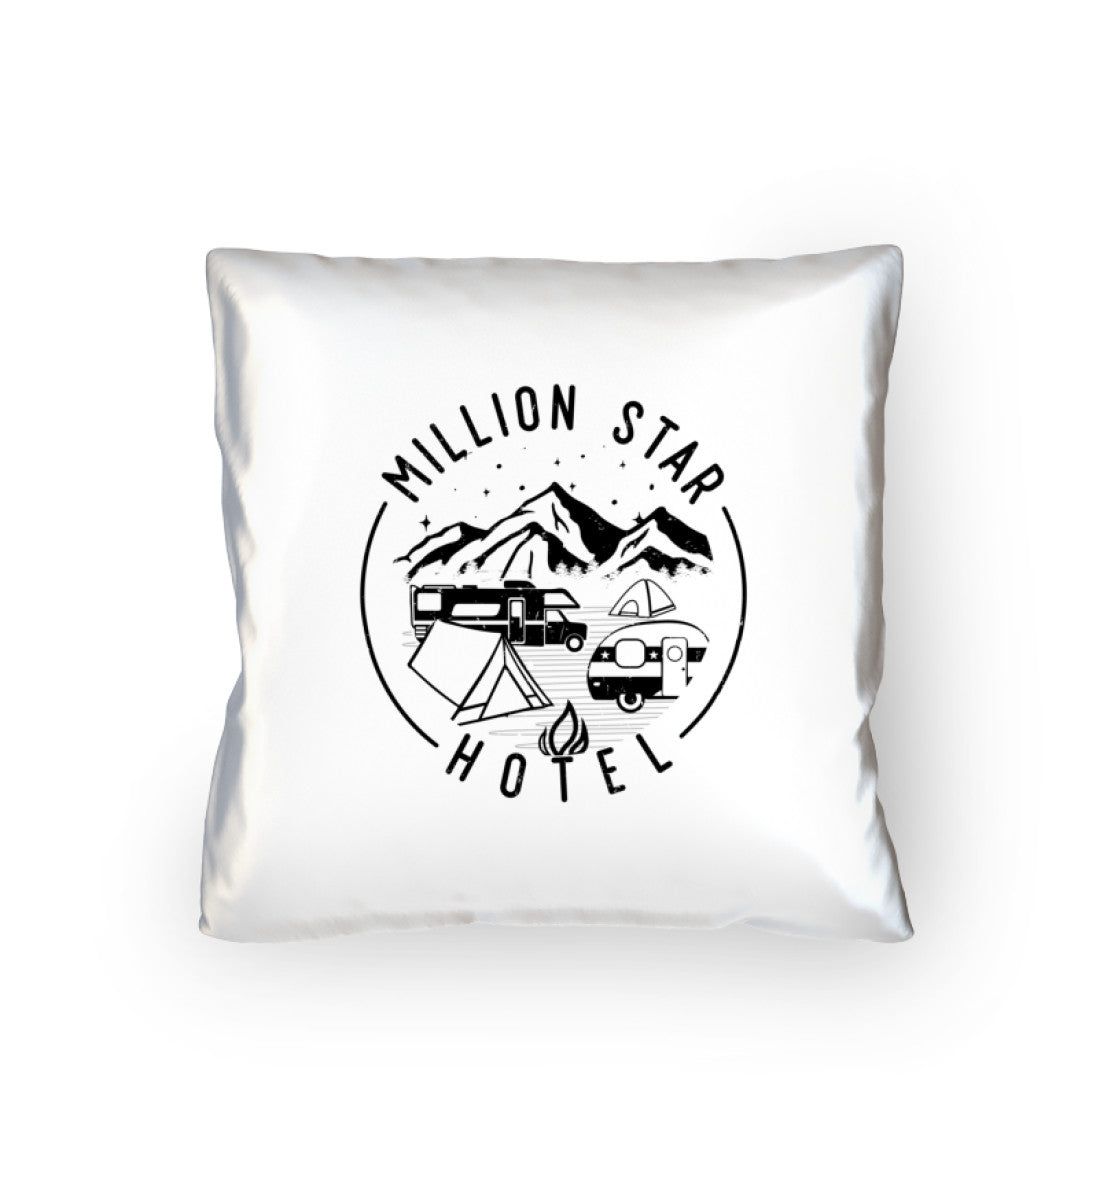 Million Star Hotel - Kissen (40x40cm) camping mountainbike Default Title